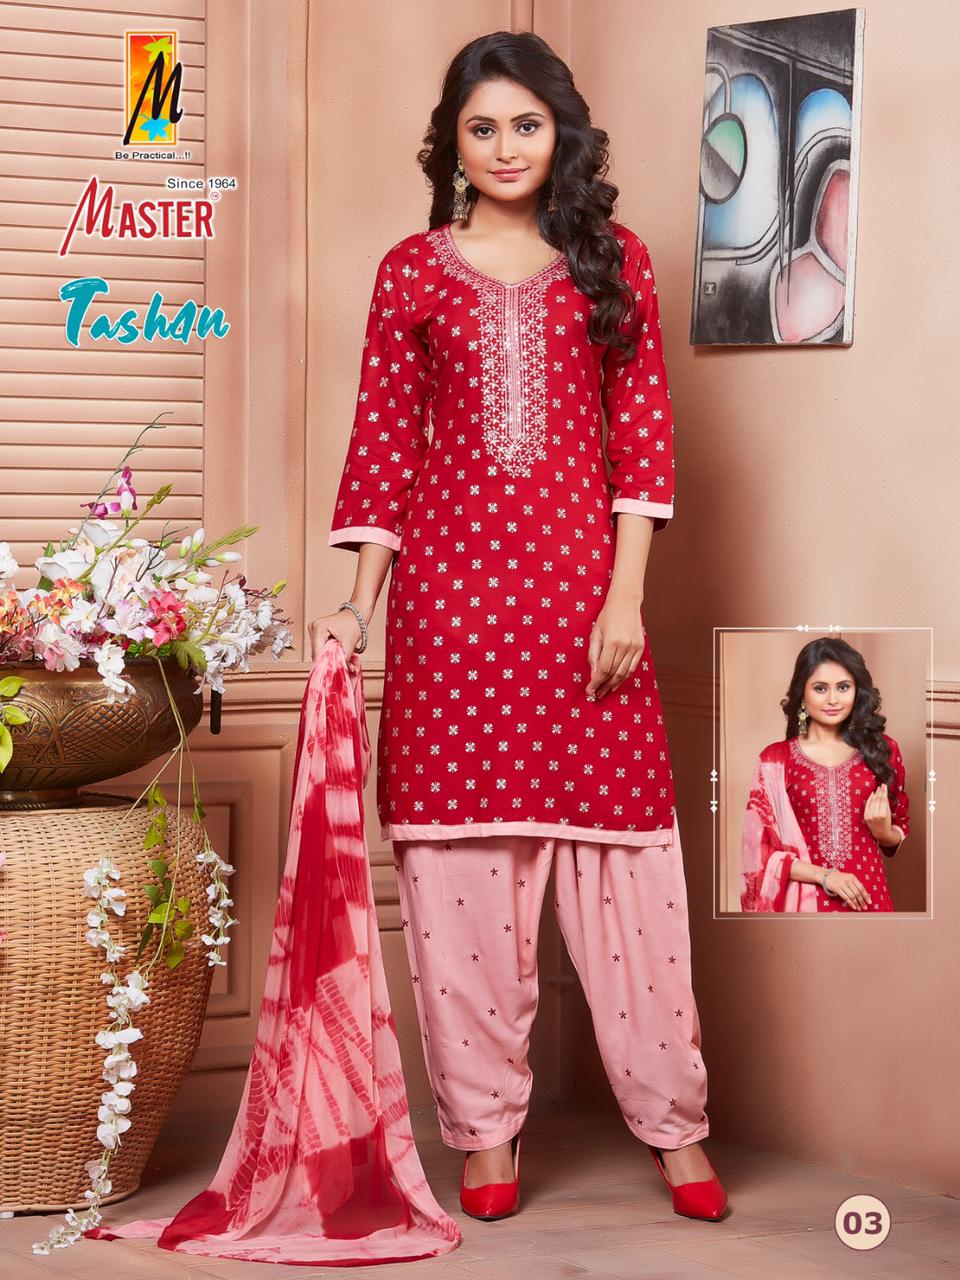 Tashan Master Rayon Readymade Salwar Suits